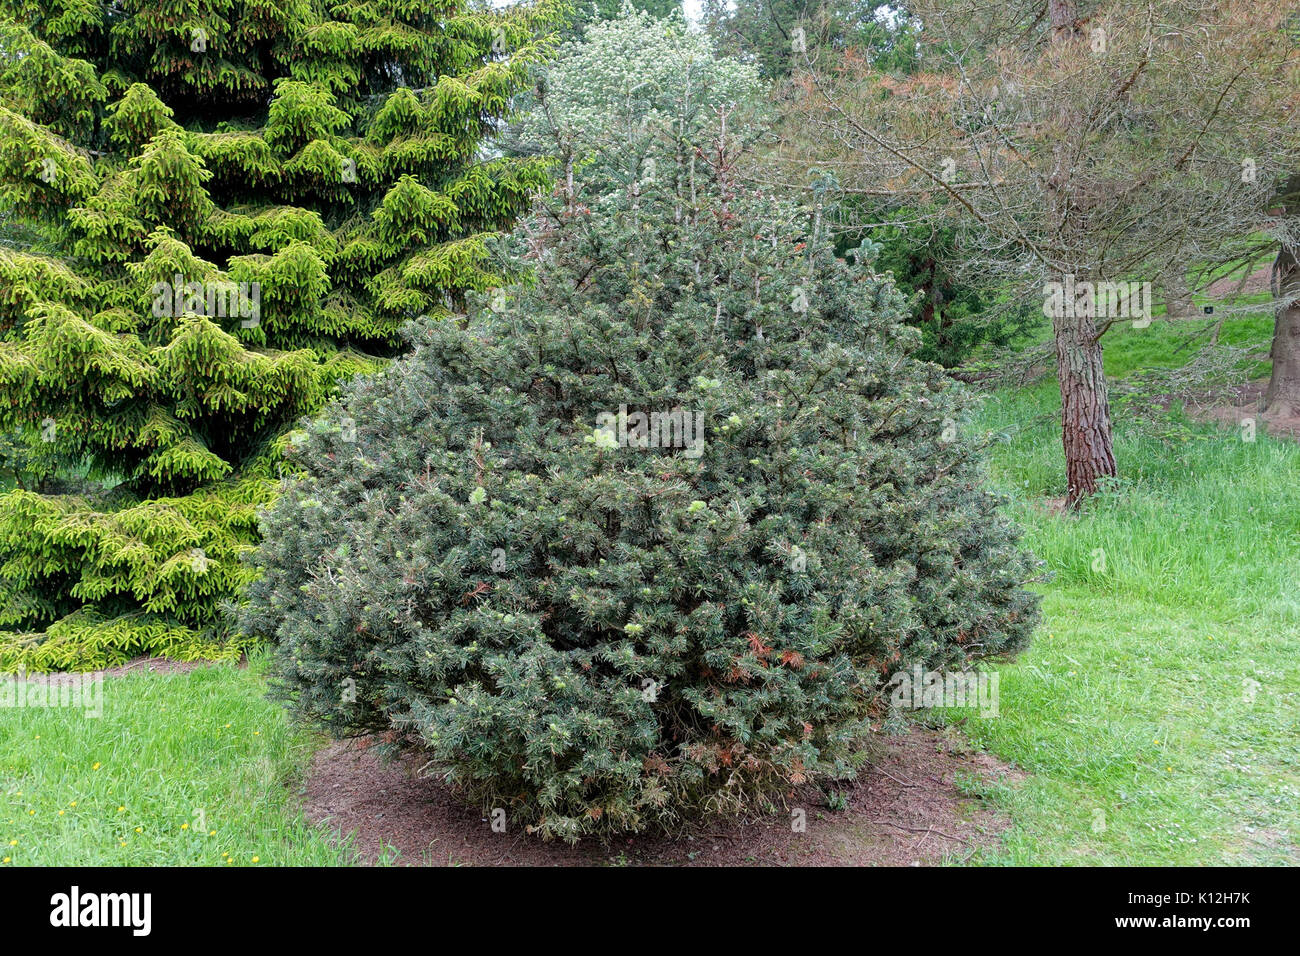 Abies balsamea   Hillier Gardens   Romsey, Hampshire, England   DSC04413 Stock Photo